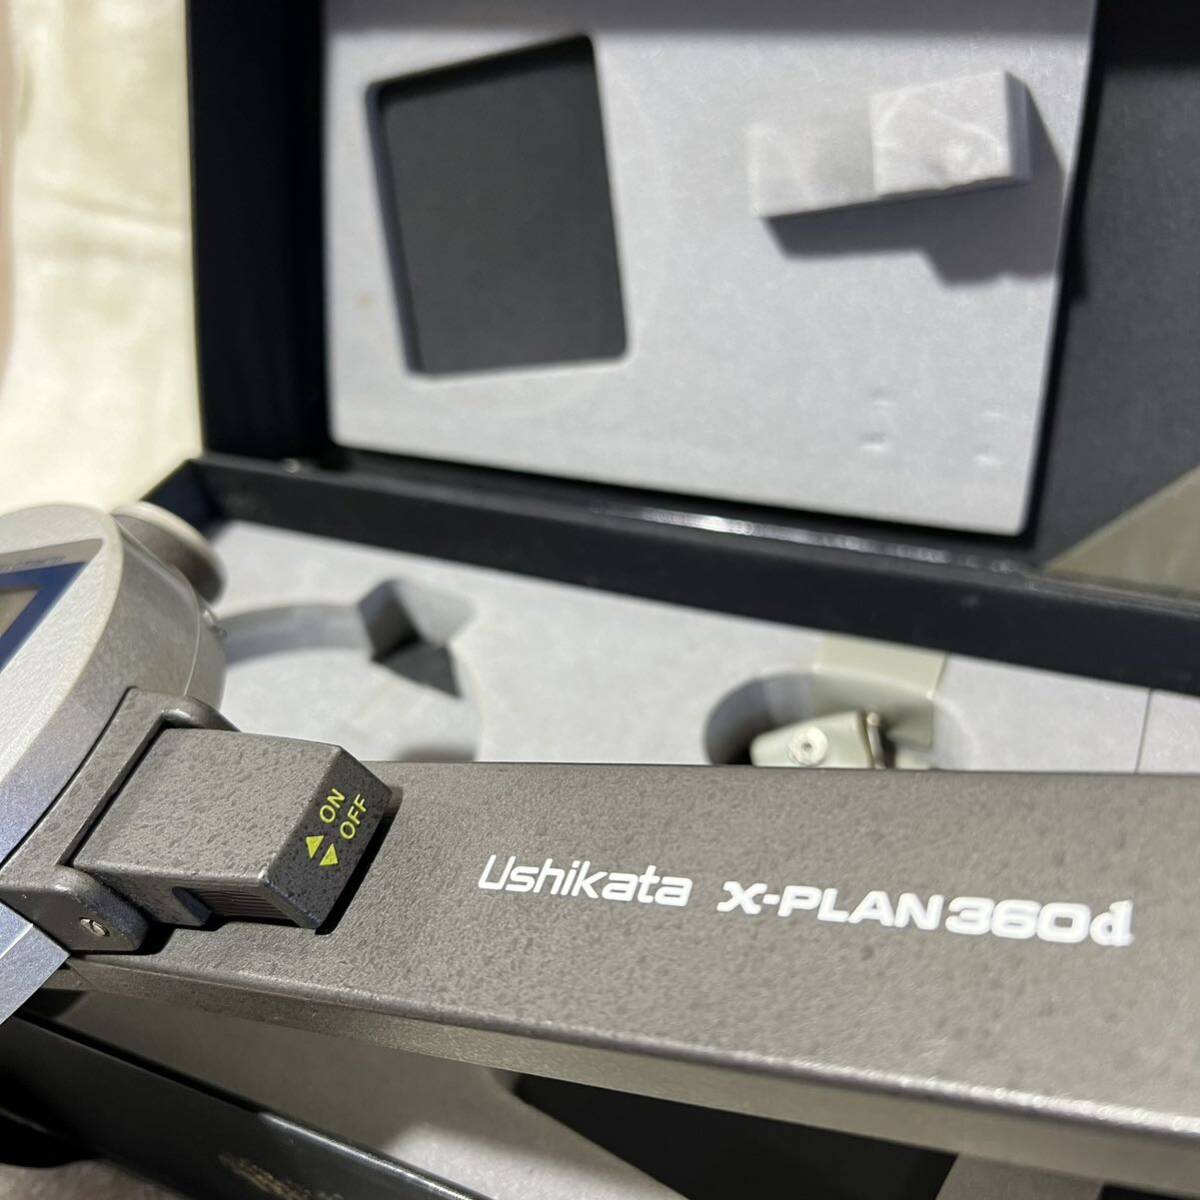 C1000 牛方商会 ushikata X-PLAN 360d 測量機 ケース入り 通電確認あり 動作確認無し ユーズド_画像7